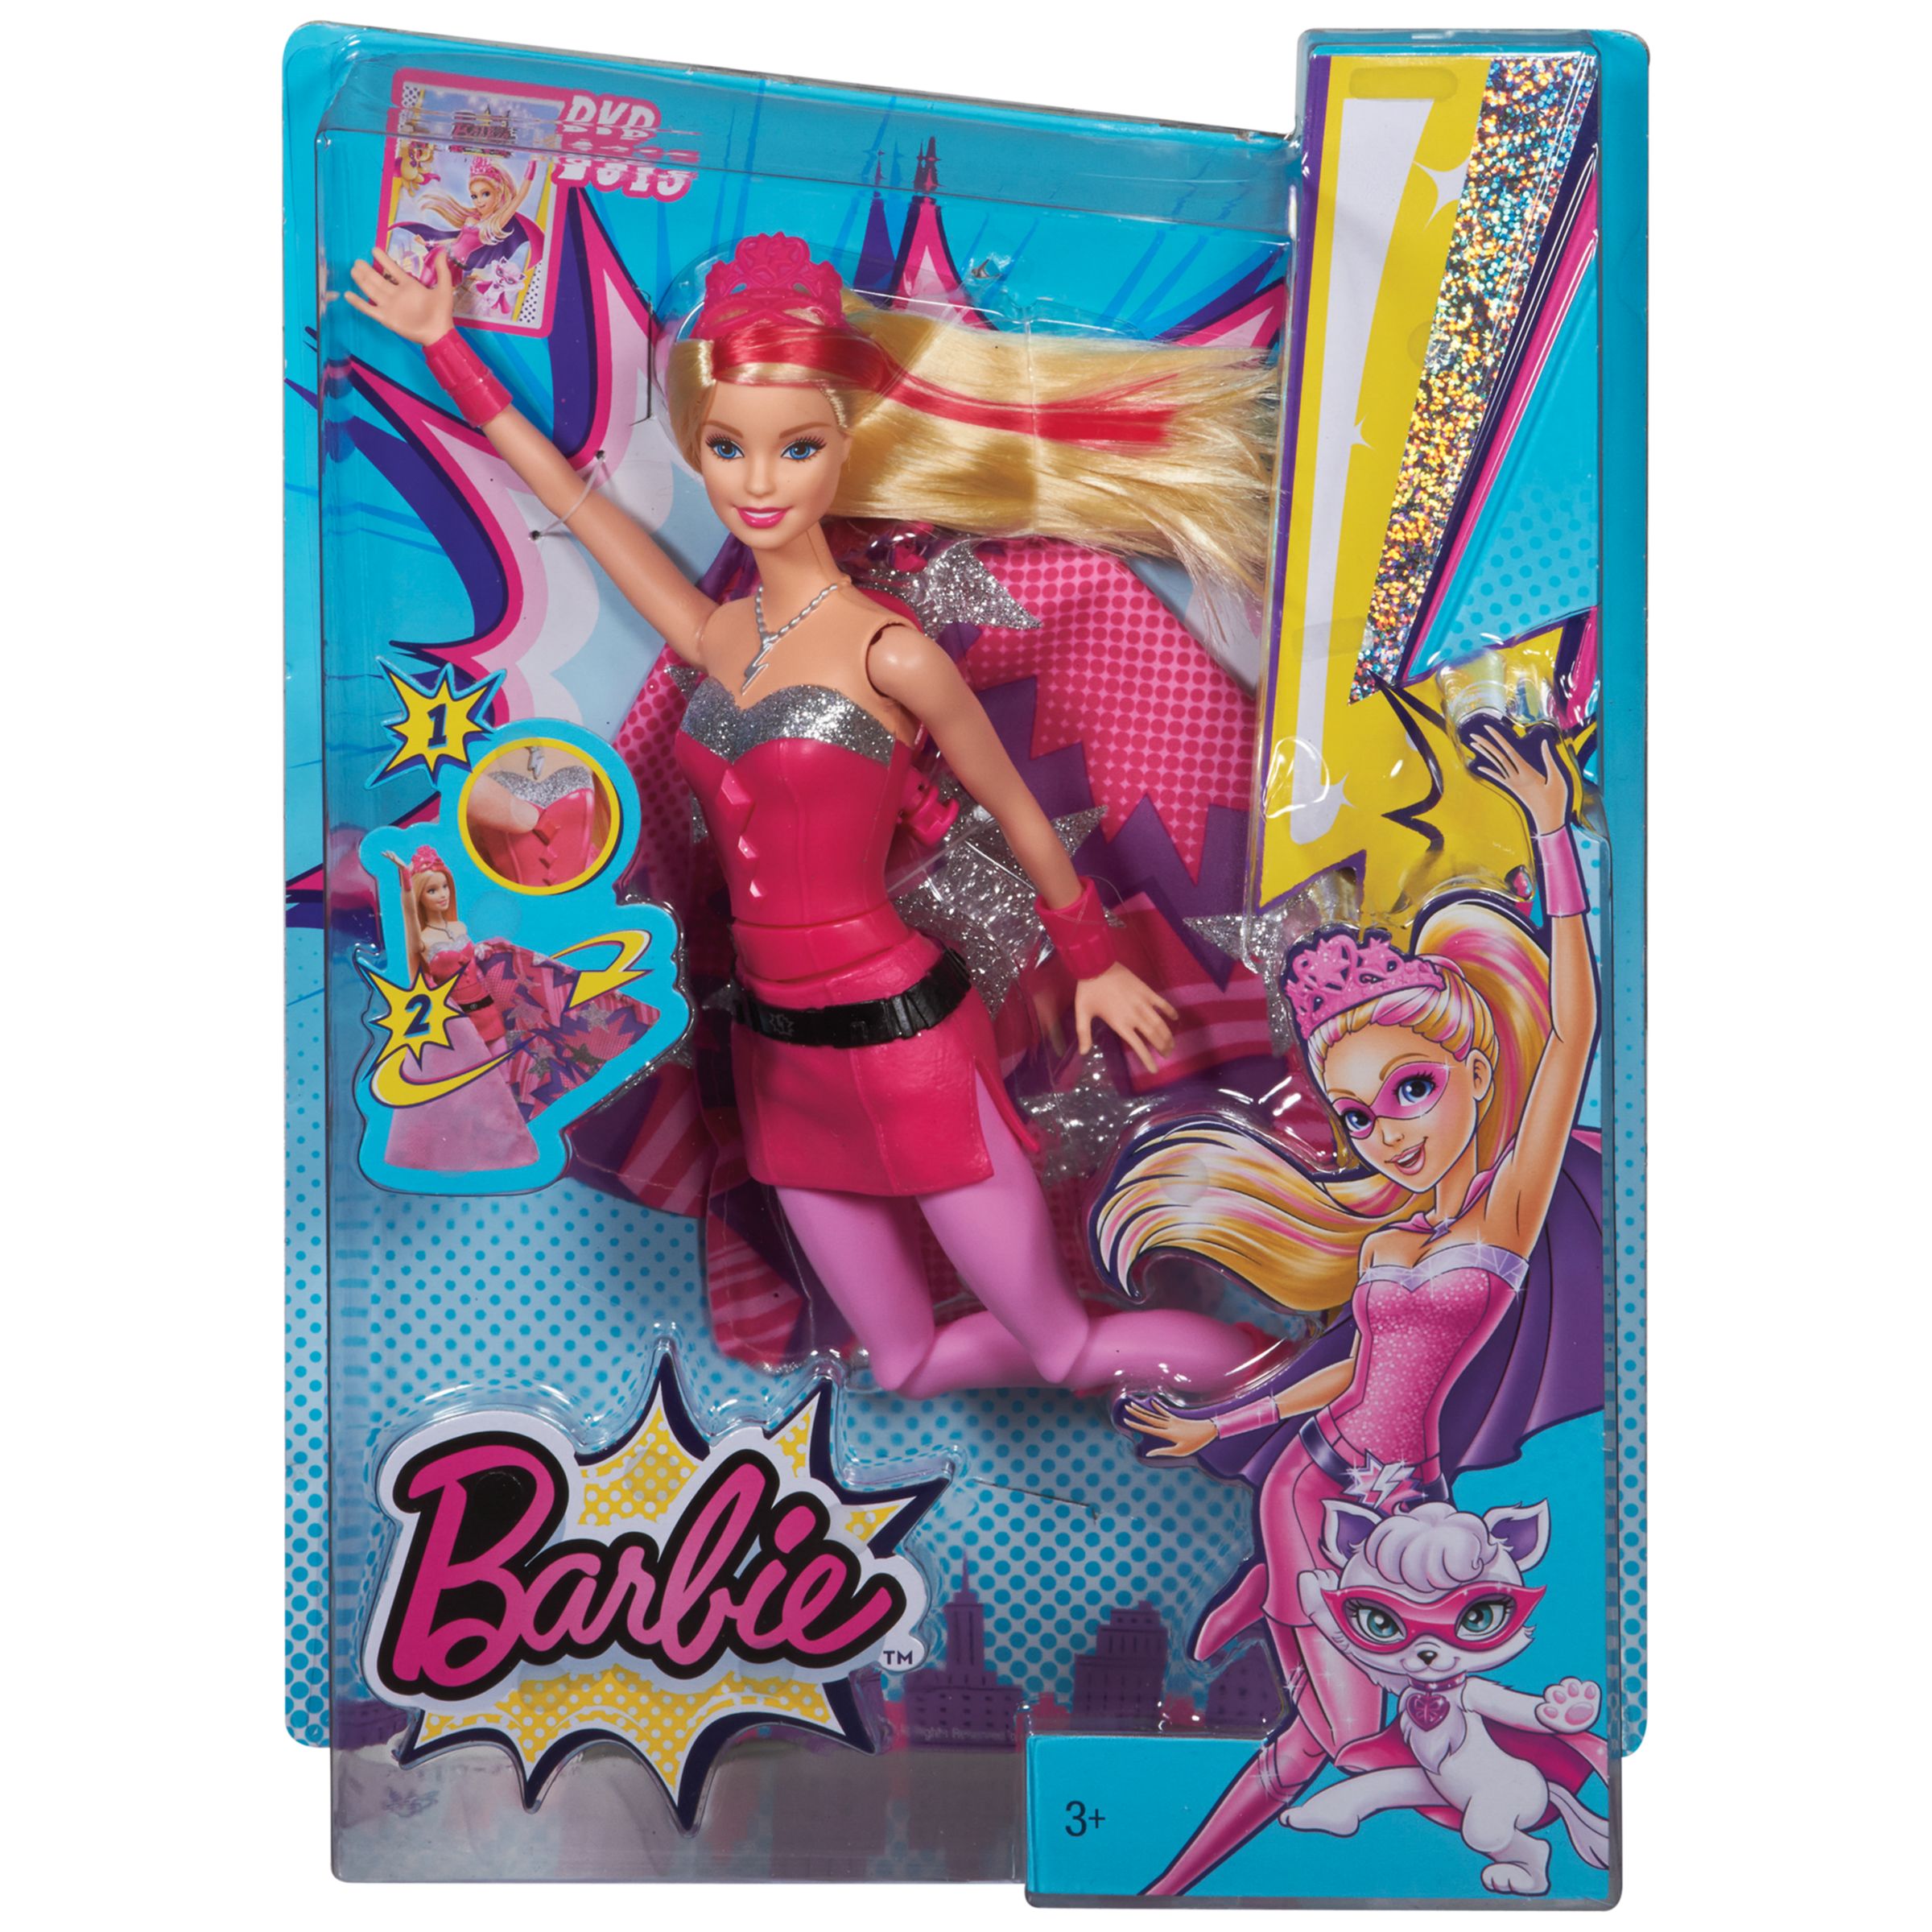 superhero barbie